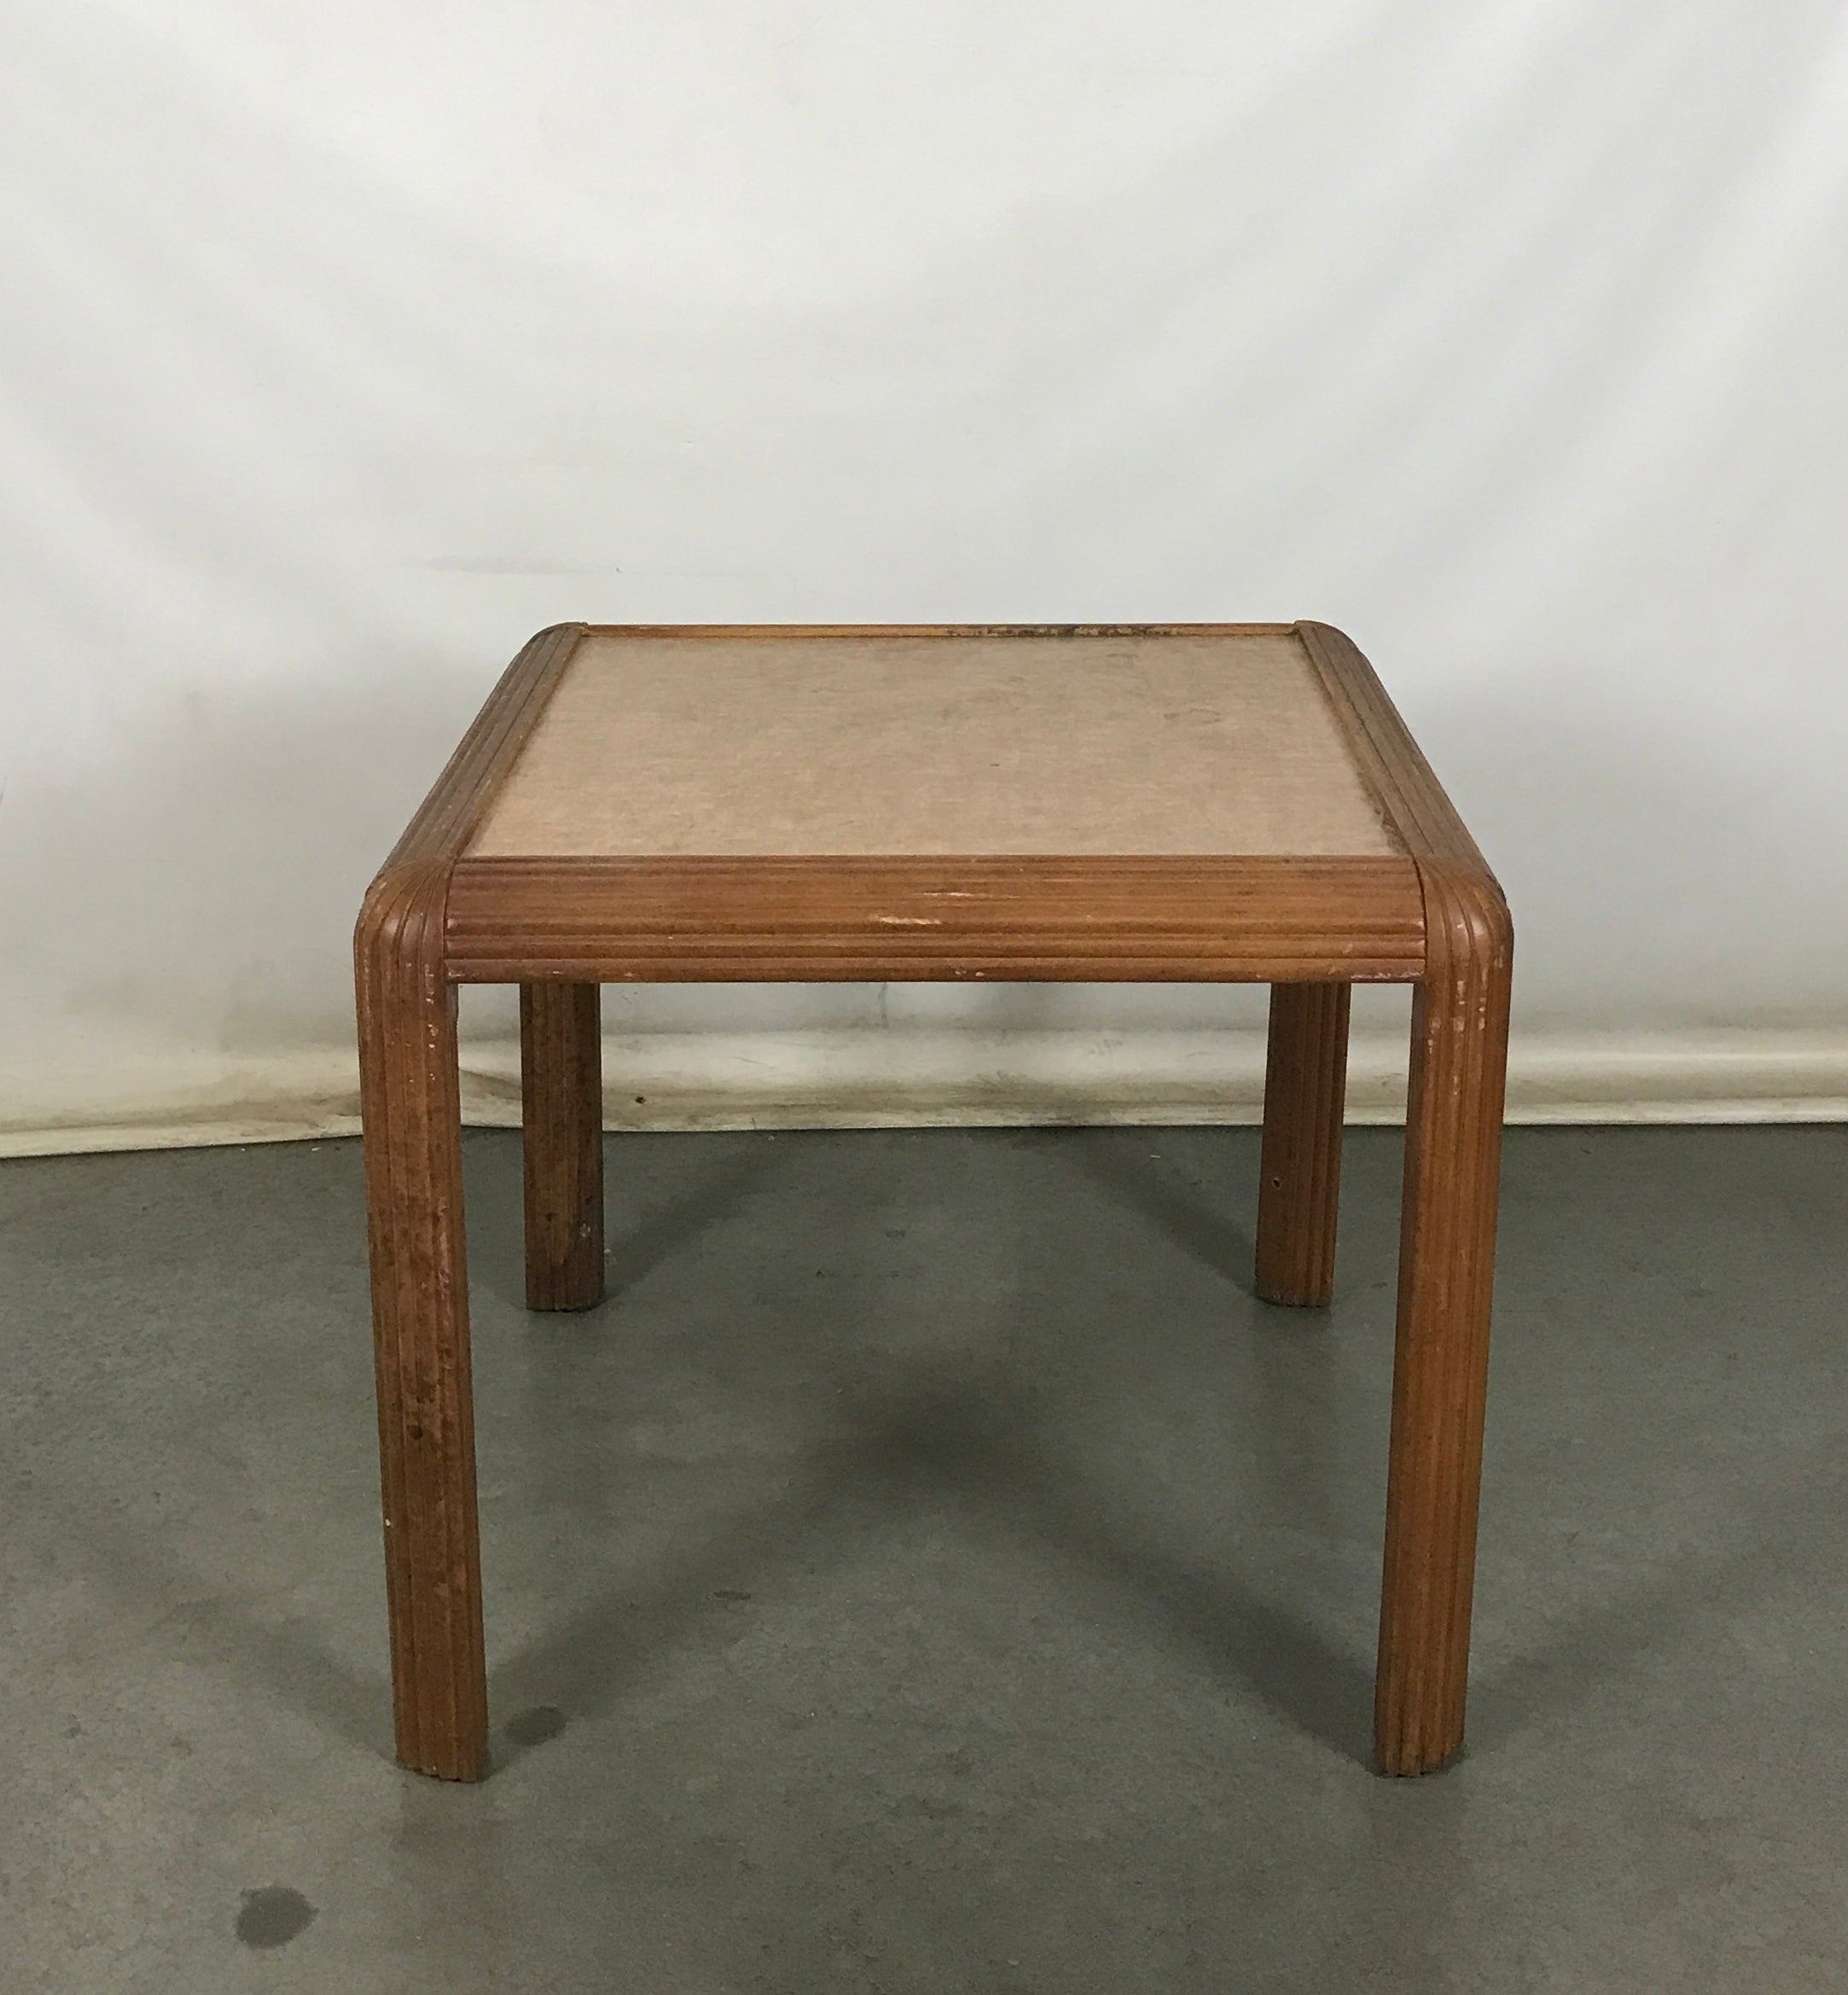 Medium Square Coffee Table